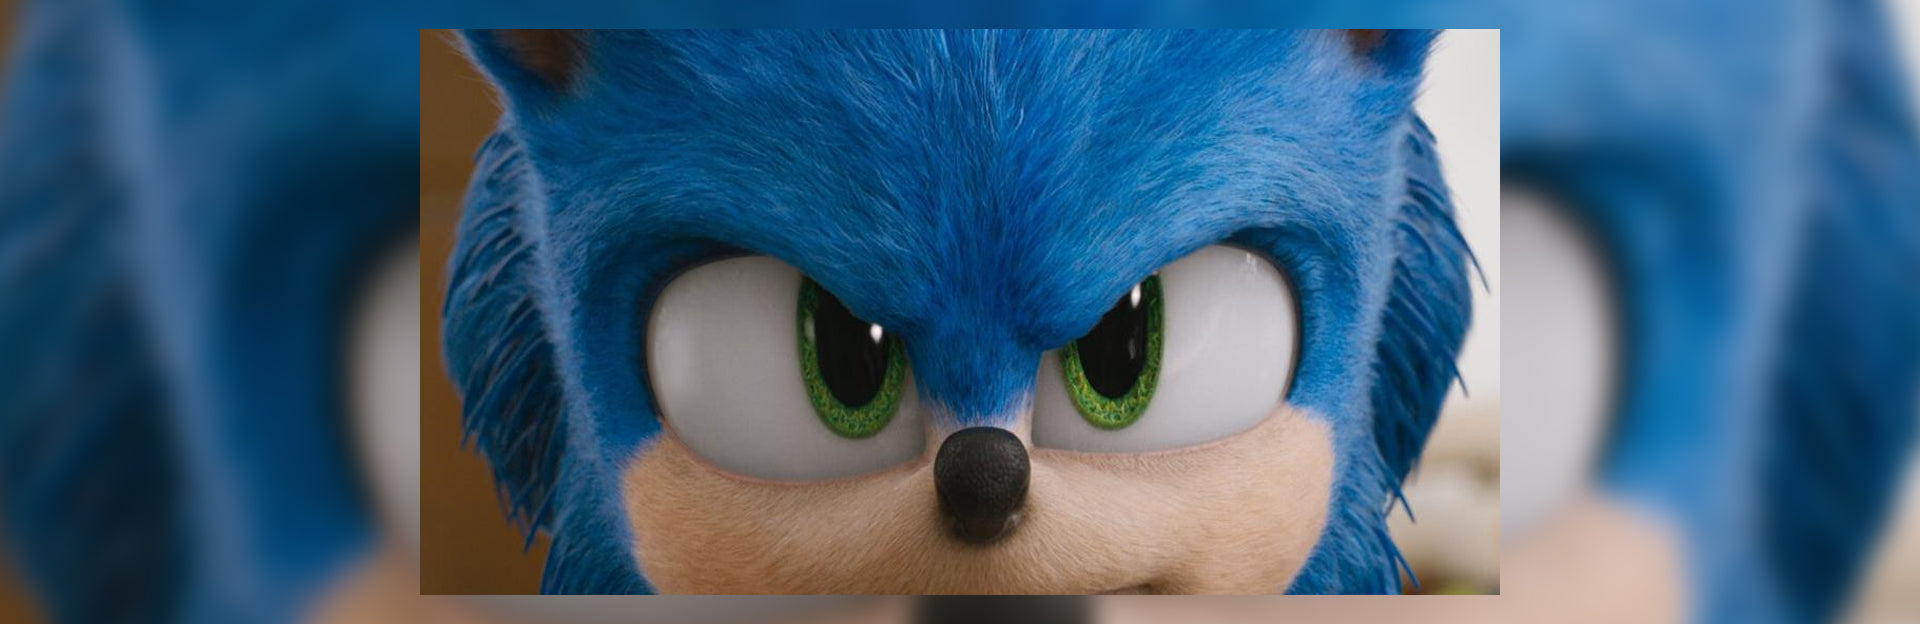 Classic Sonic + Super/Hyper Forms! : r/SonicTheHedgehog